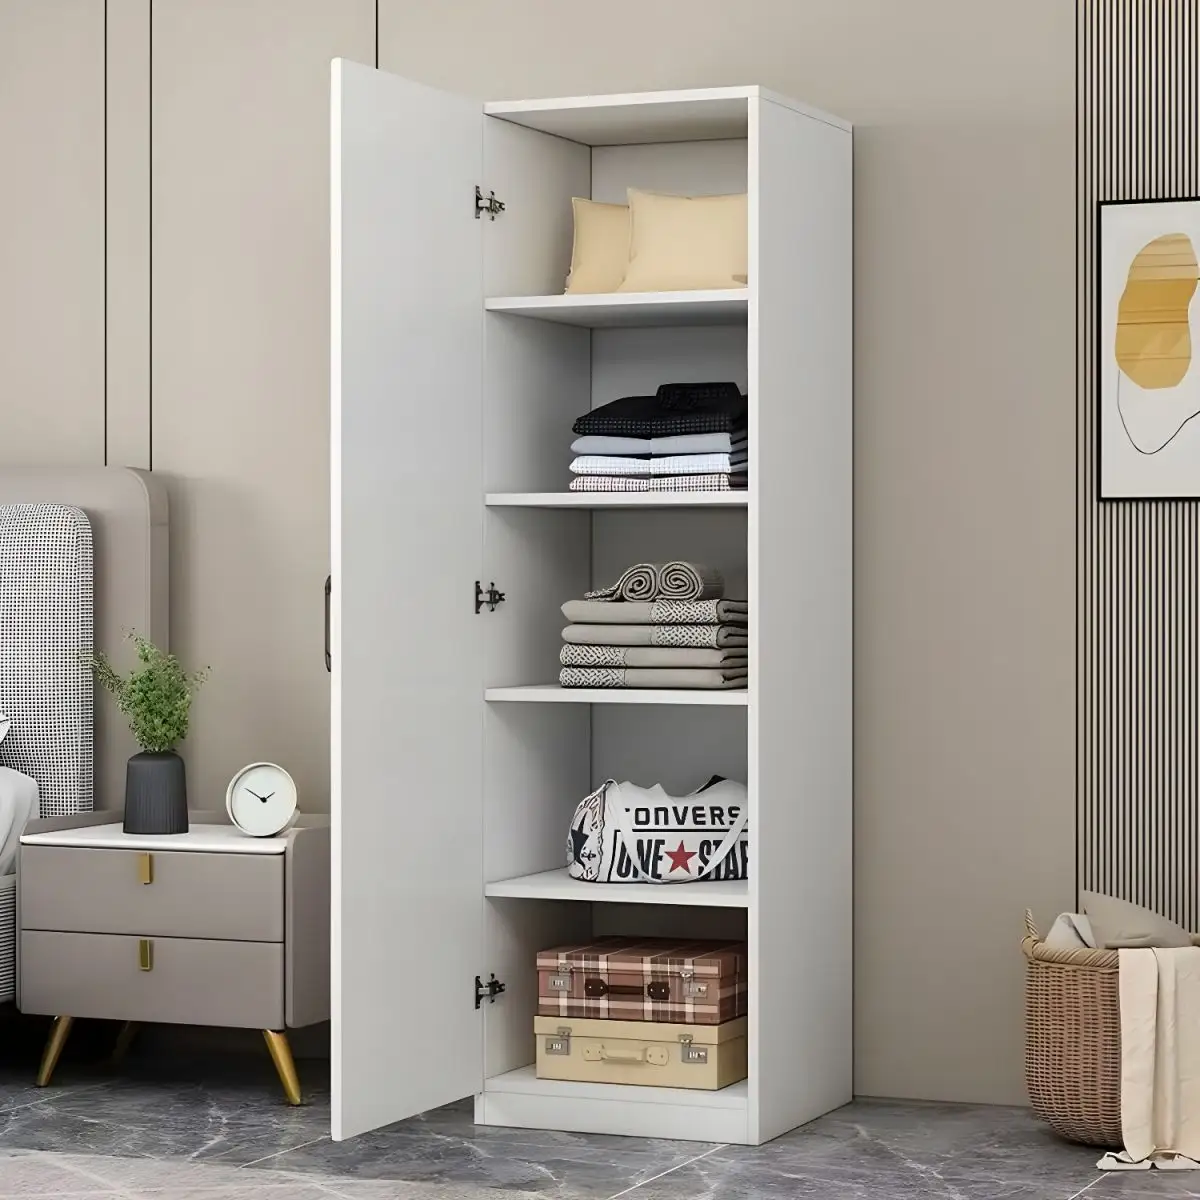 Multipurpose living room cabinets large space storage wardrobe closet modern design cabinet